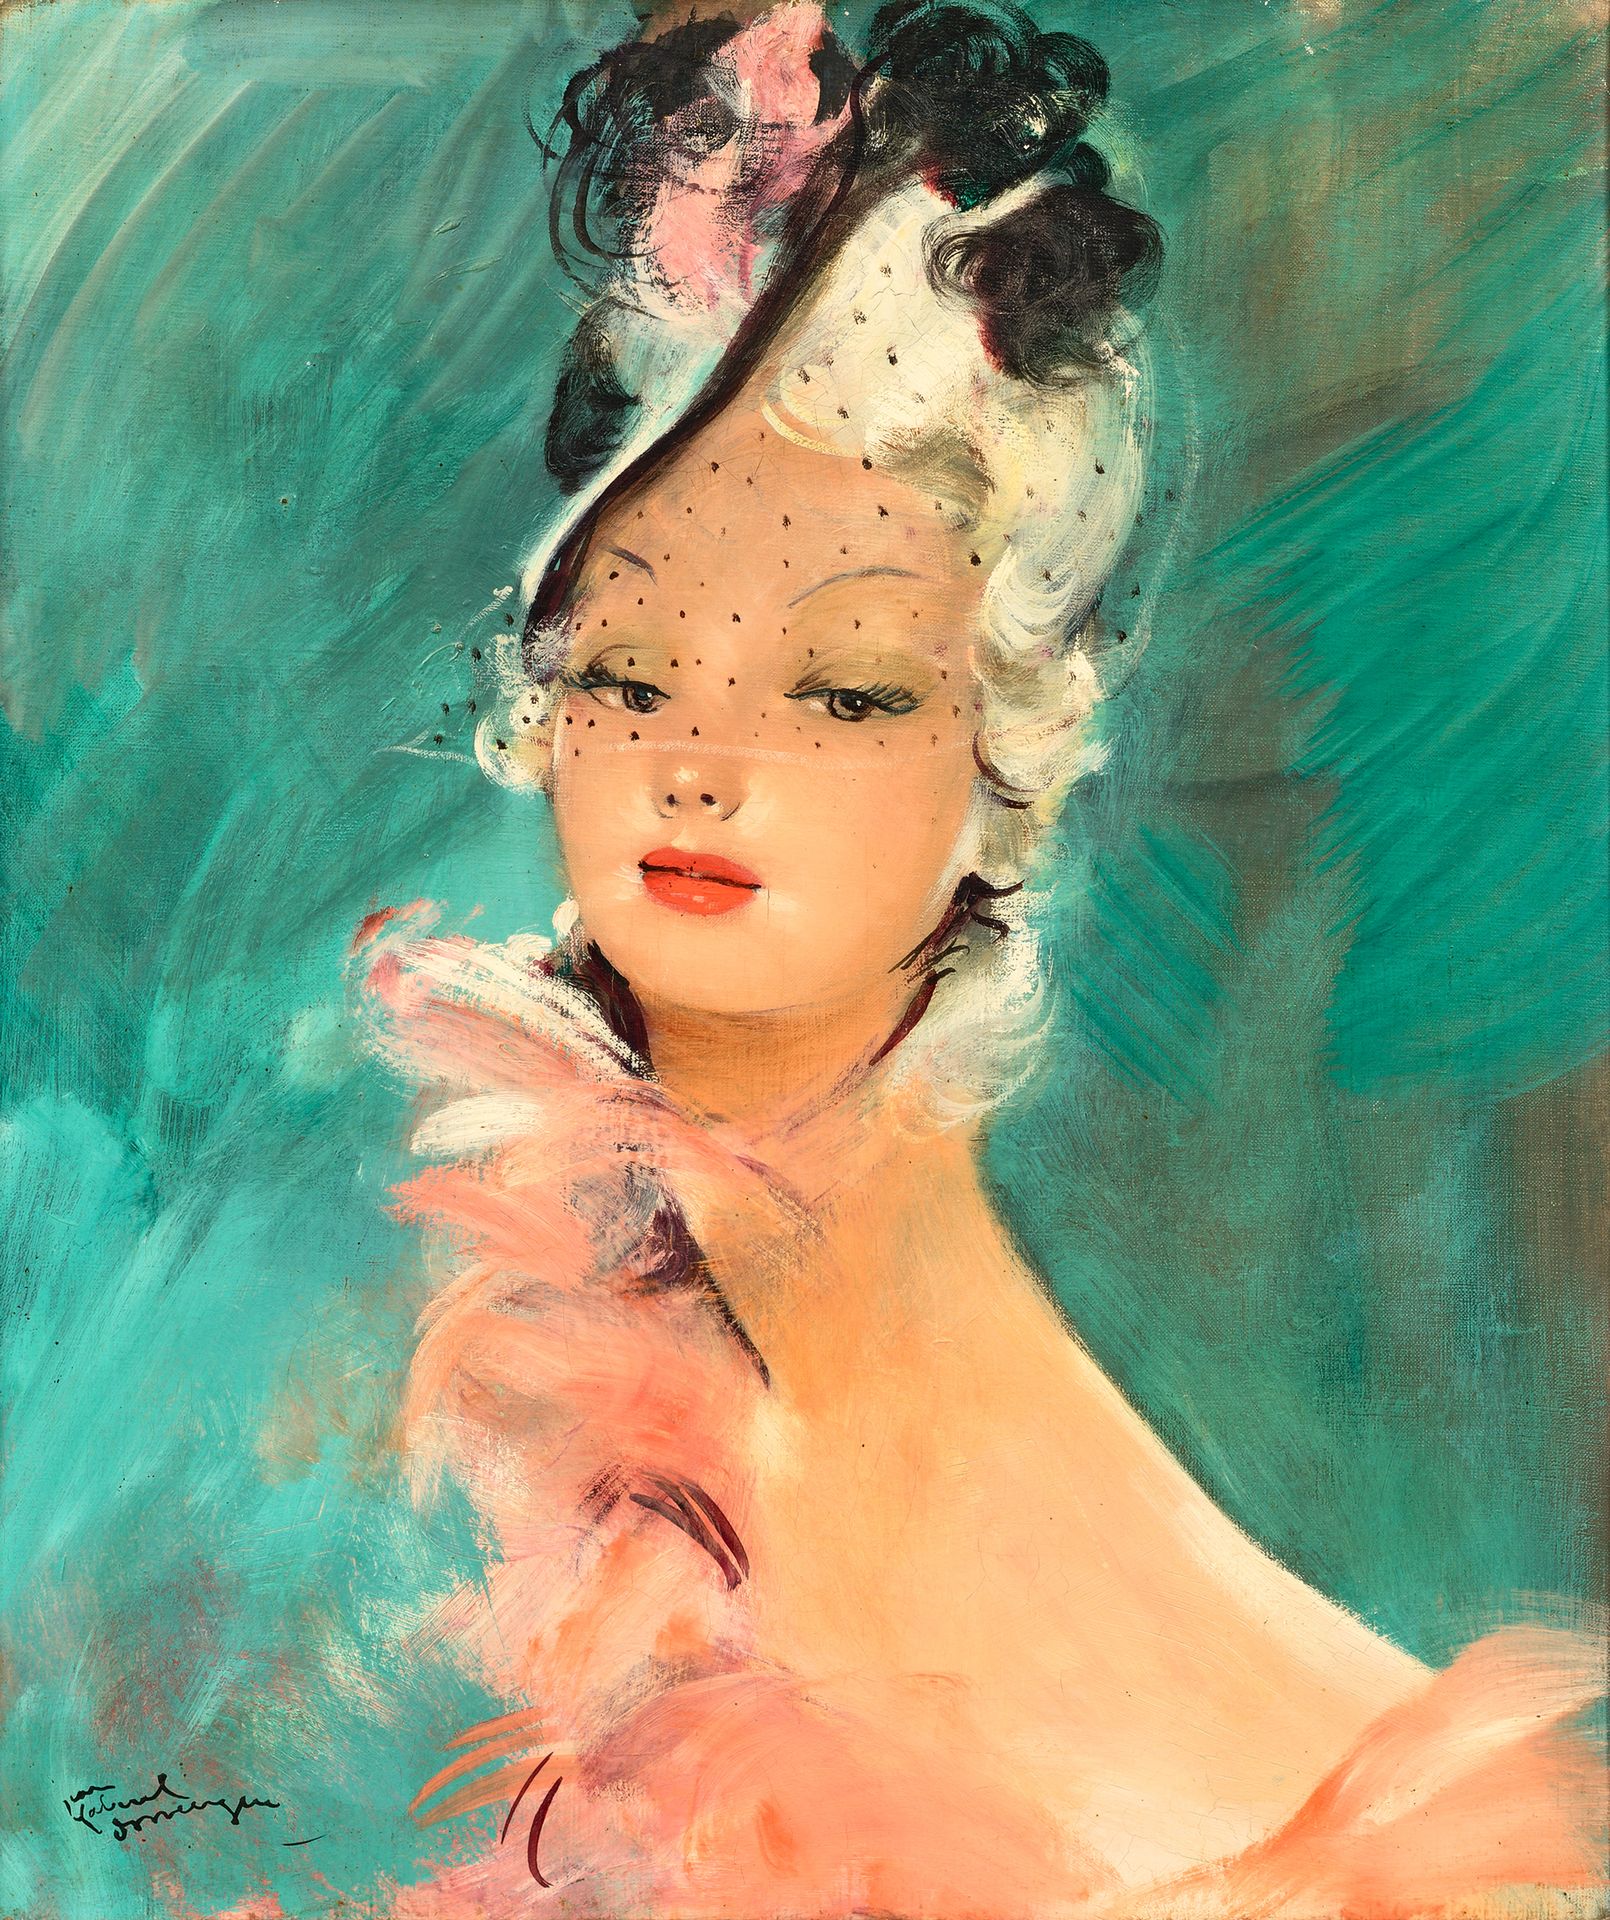 Null Jean Gabriel DOMERGUE (1889-1962)

La mujer parisina

Óleo sobre lienzo

Fi&hellip;